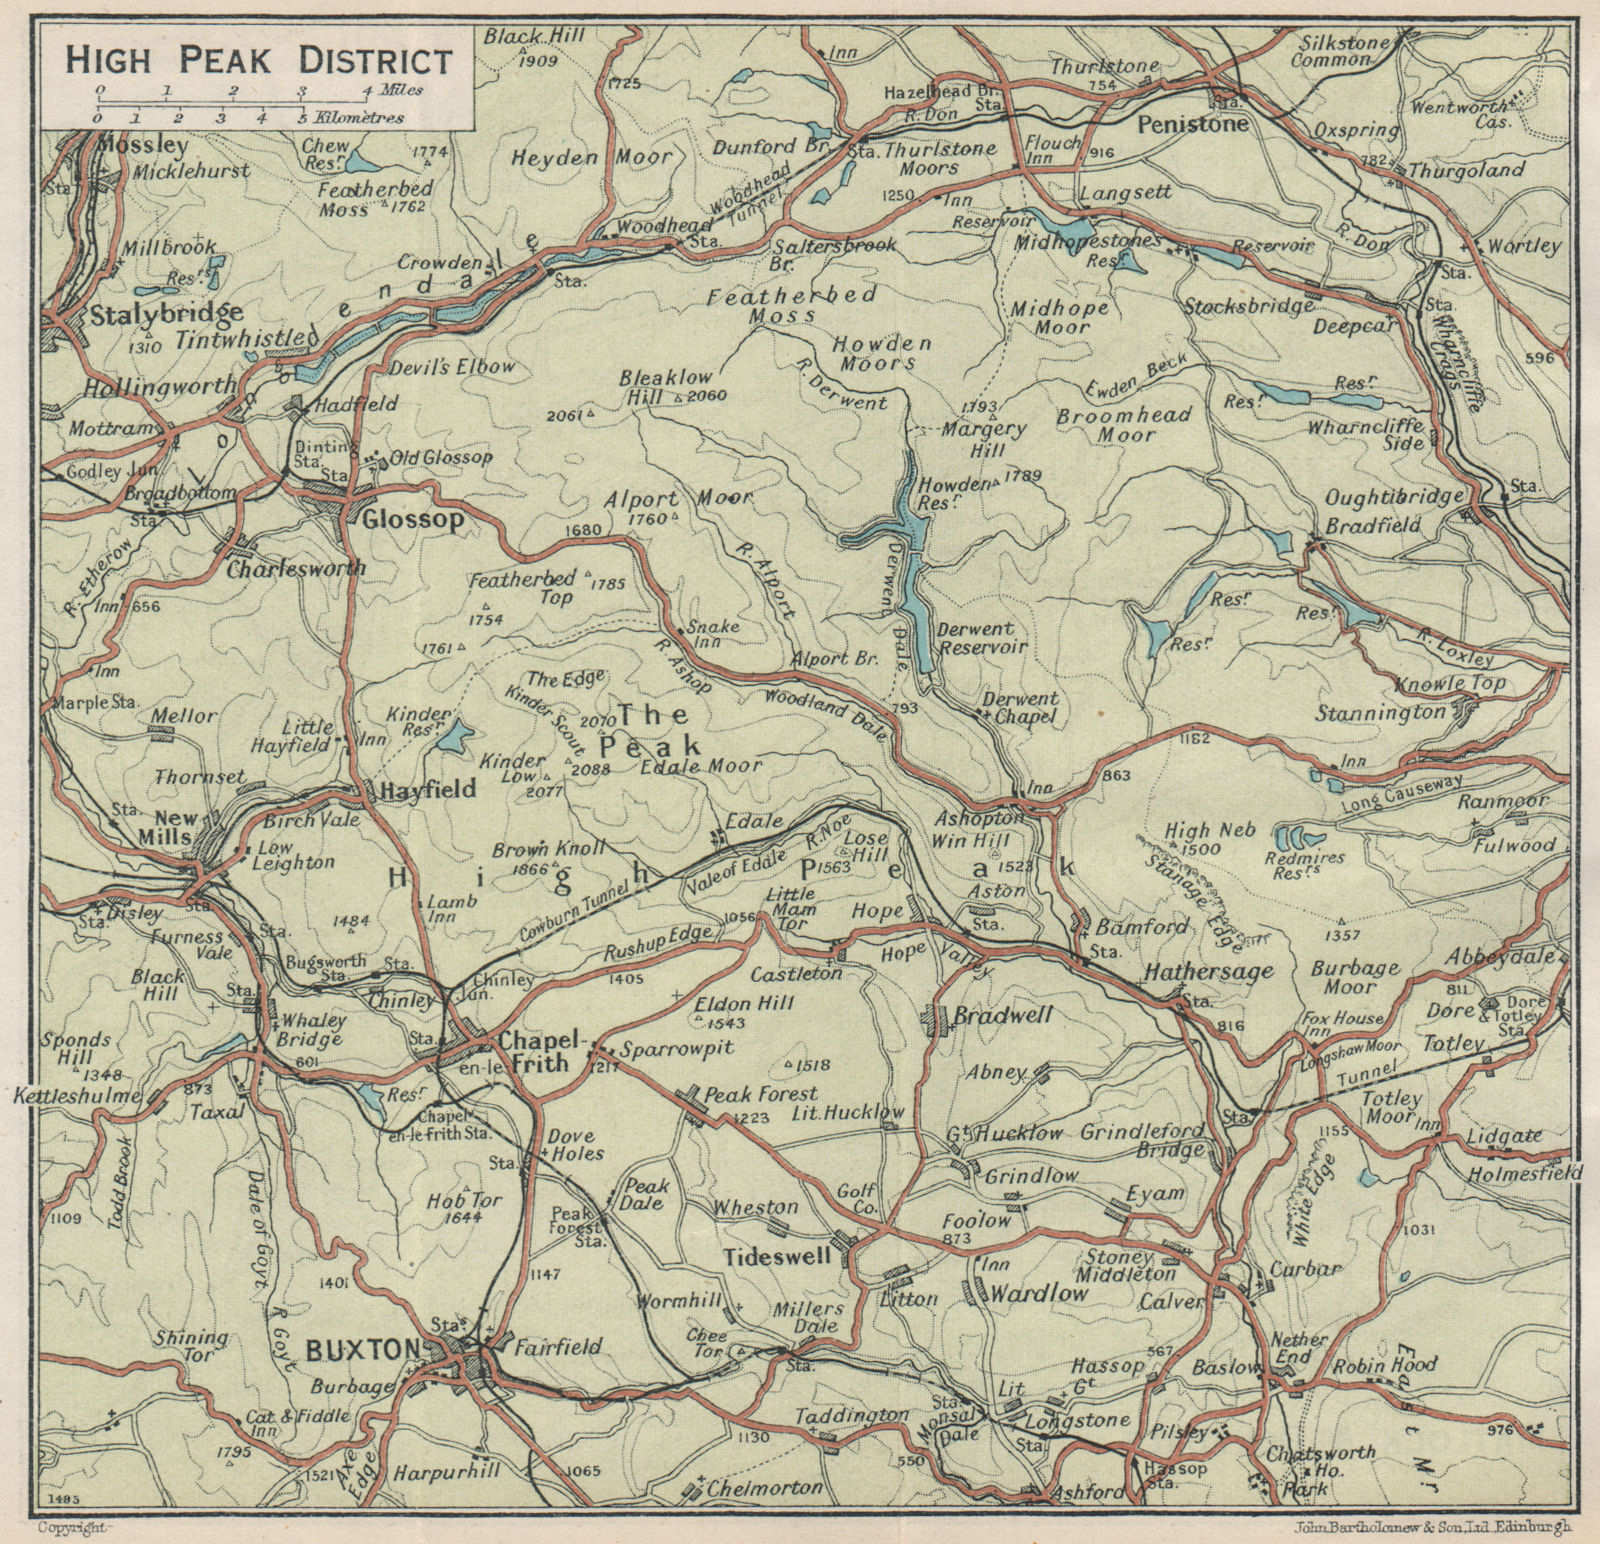 HIGH PEAK DISTRICT. Buxton Glossop Penistone Chatsworth. Derbyshire 1930 map